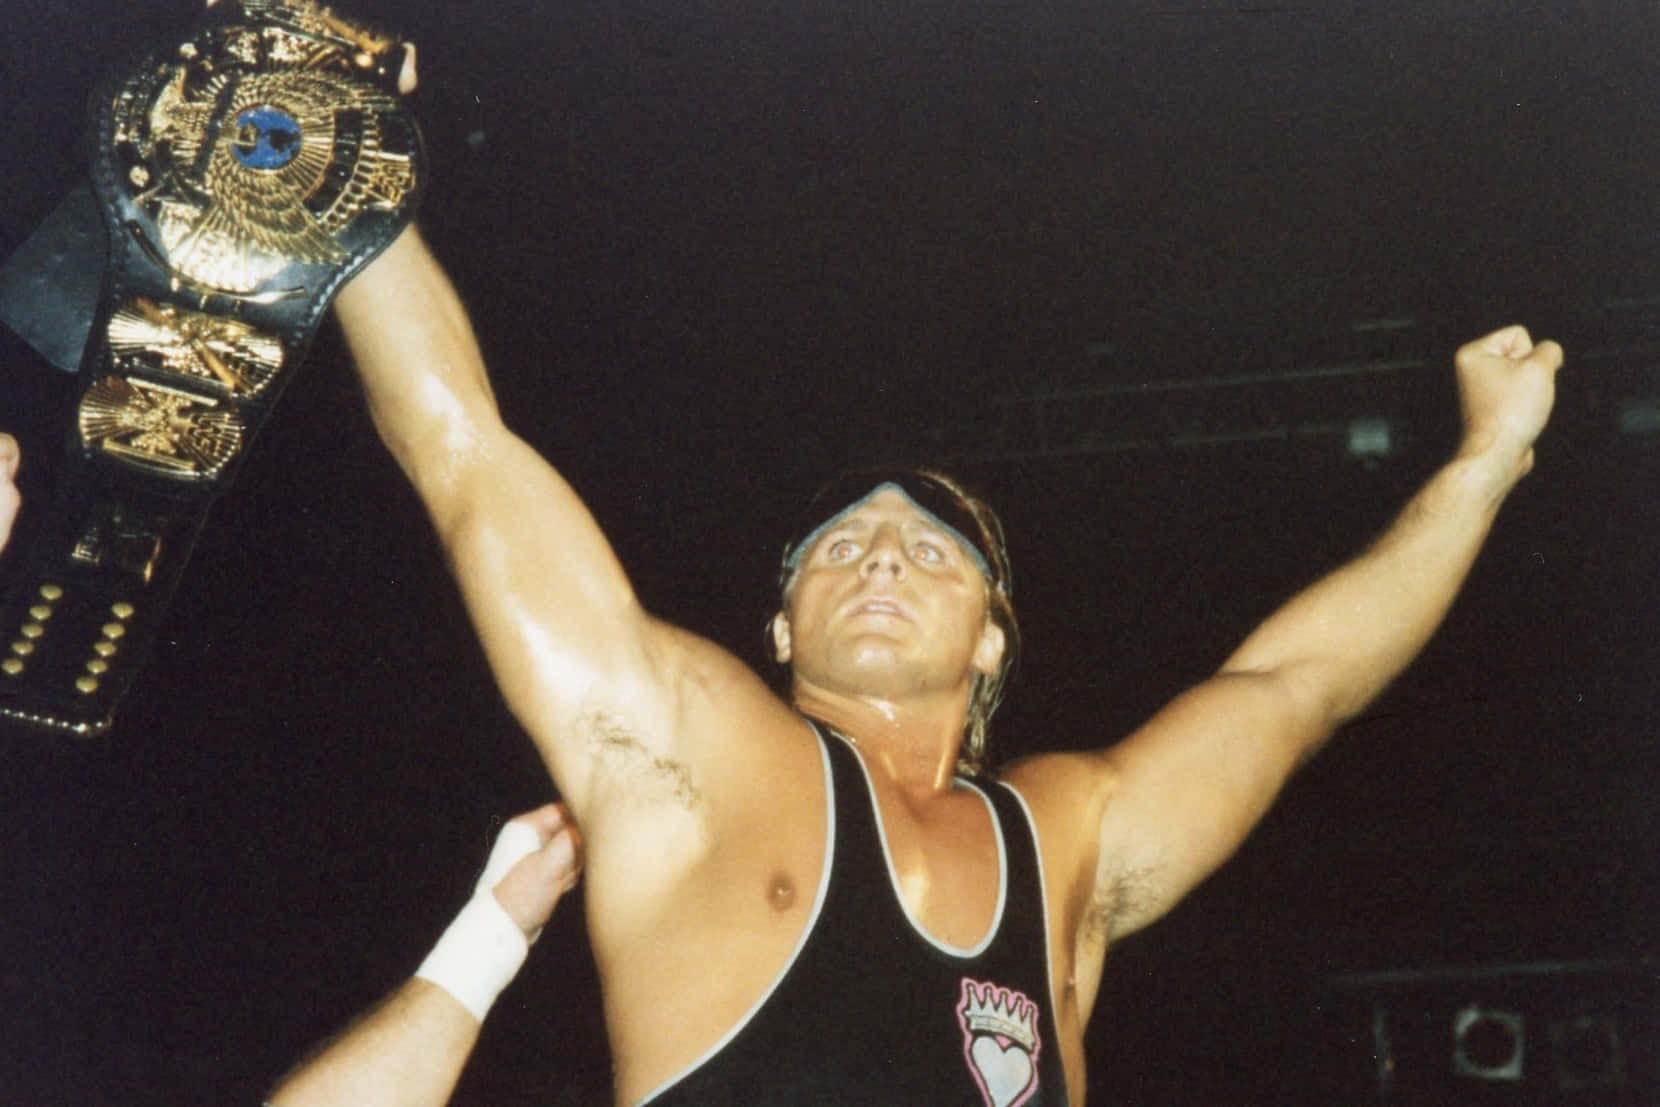 Owen Hart World Heavyweight Champion Picture